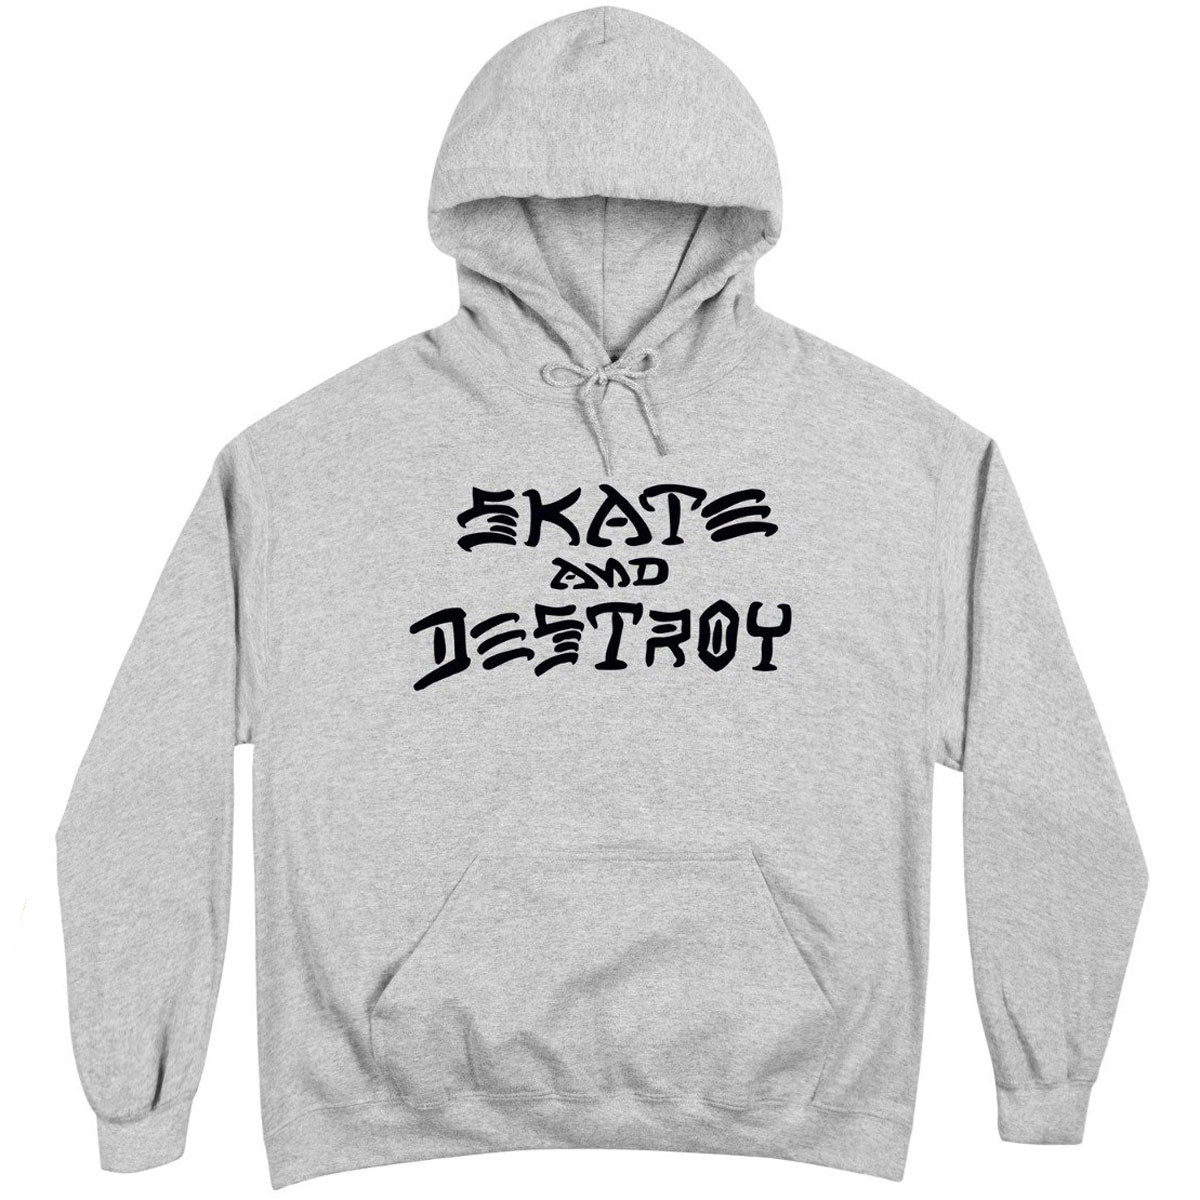 Thrasher Skate And Destroy Hoodie - Grey image 1